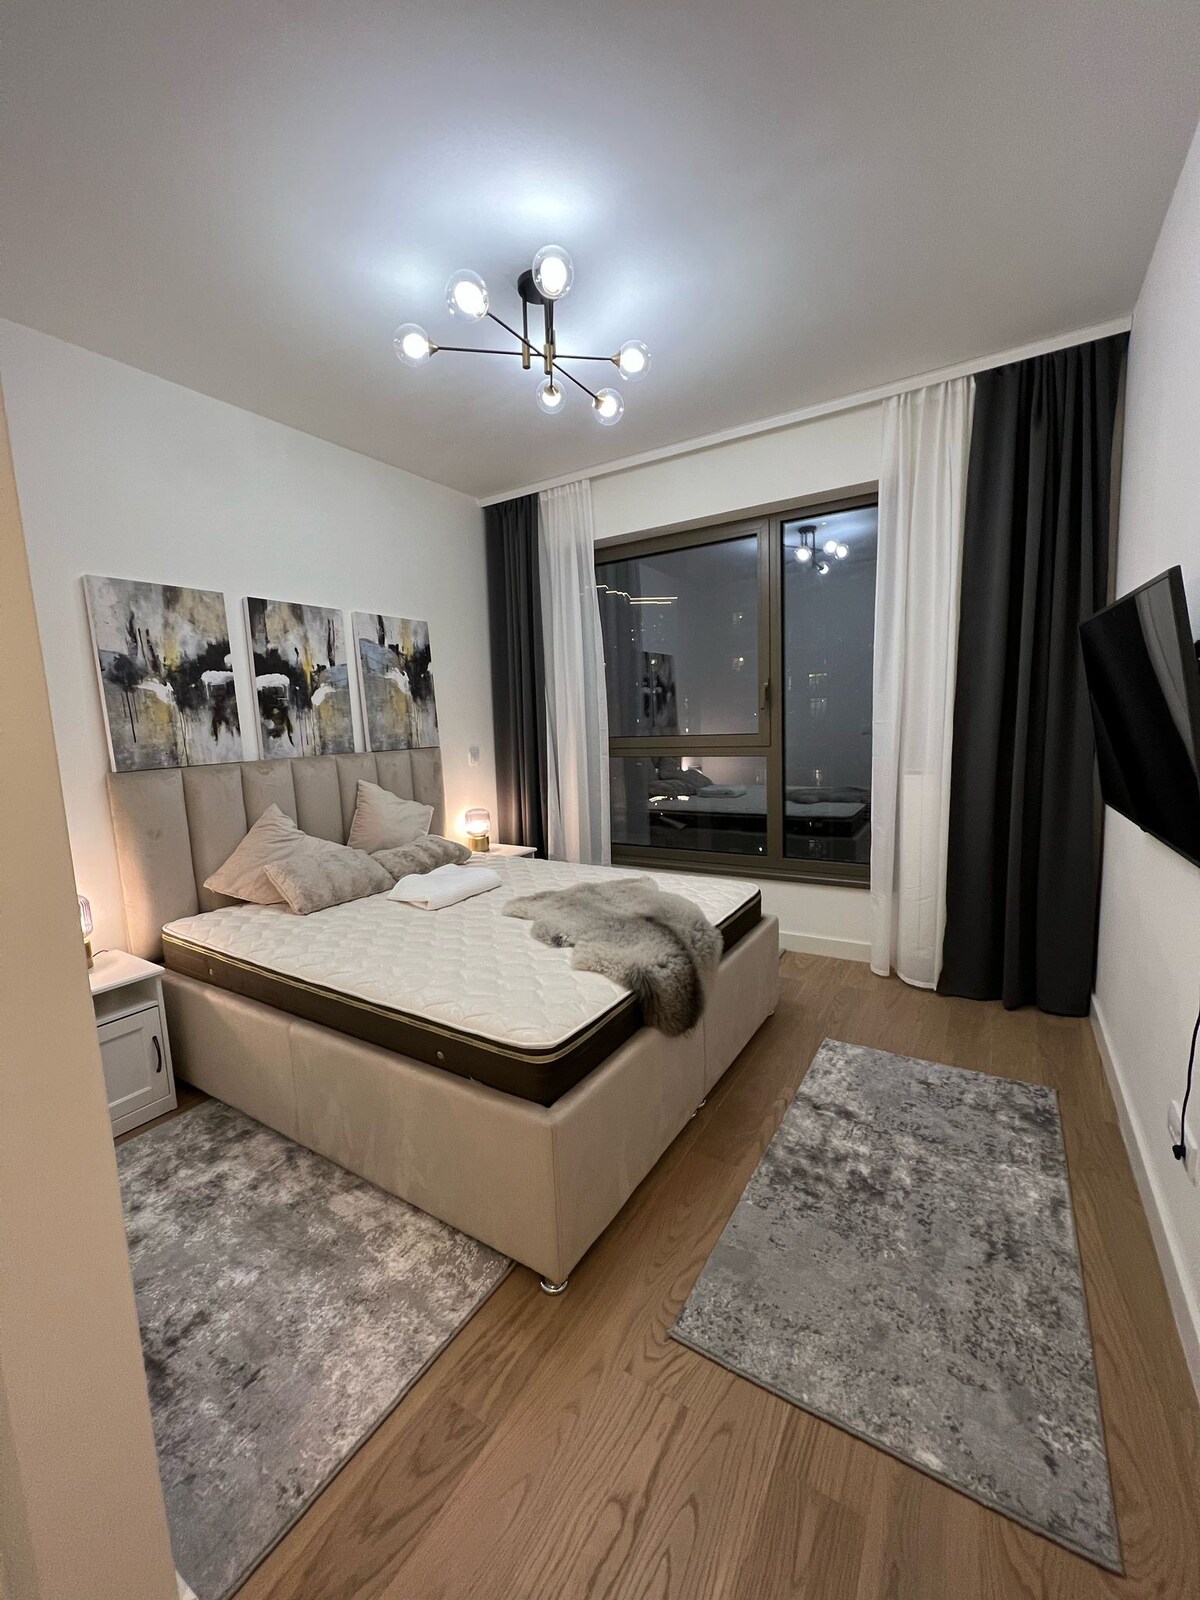 2-Bedroom Luxurious Apartment BW